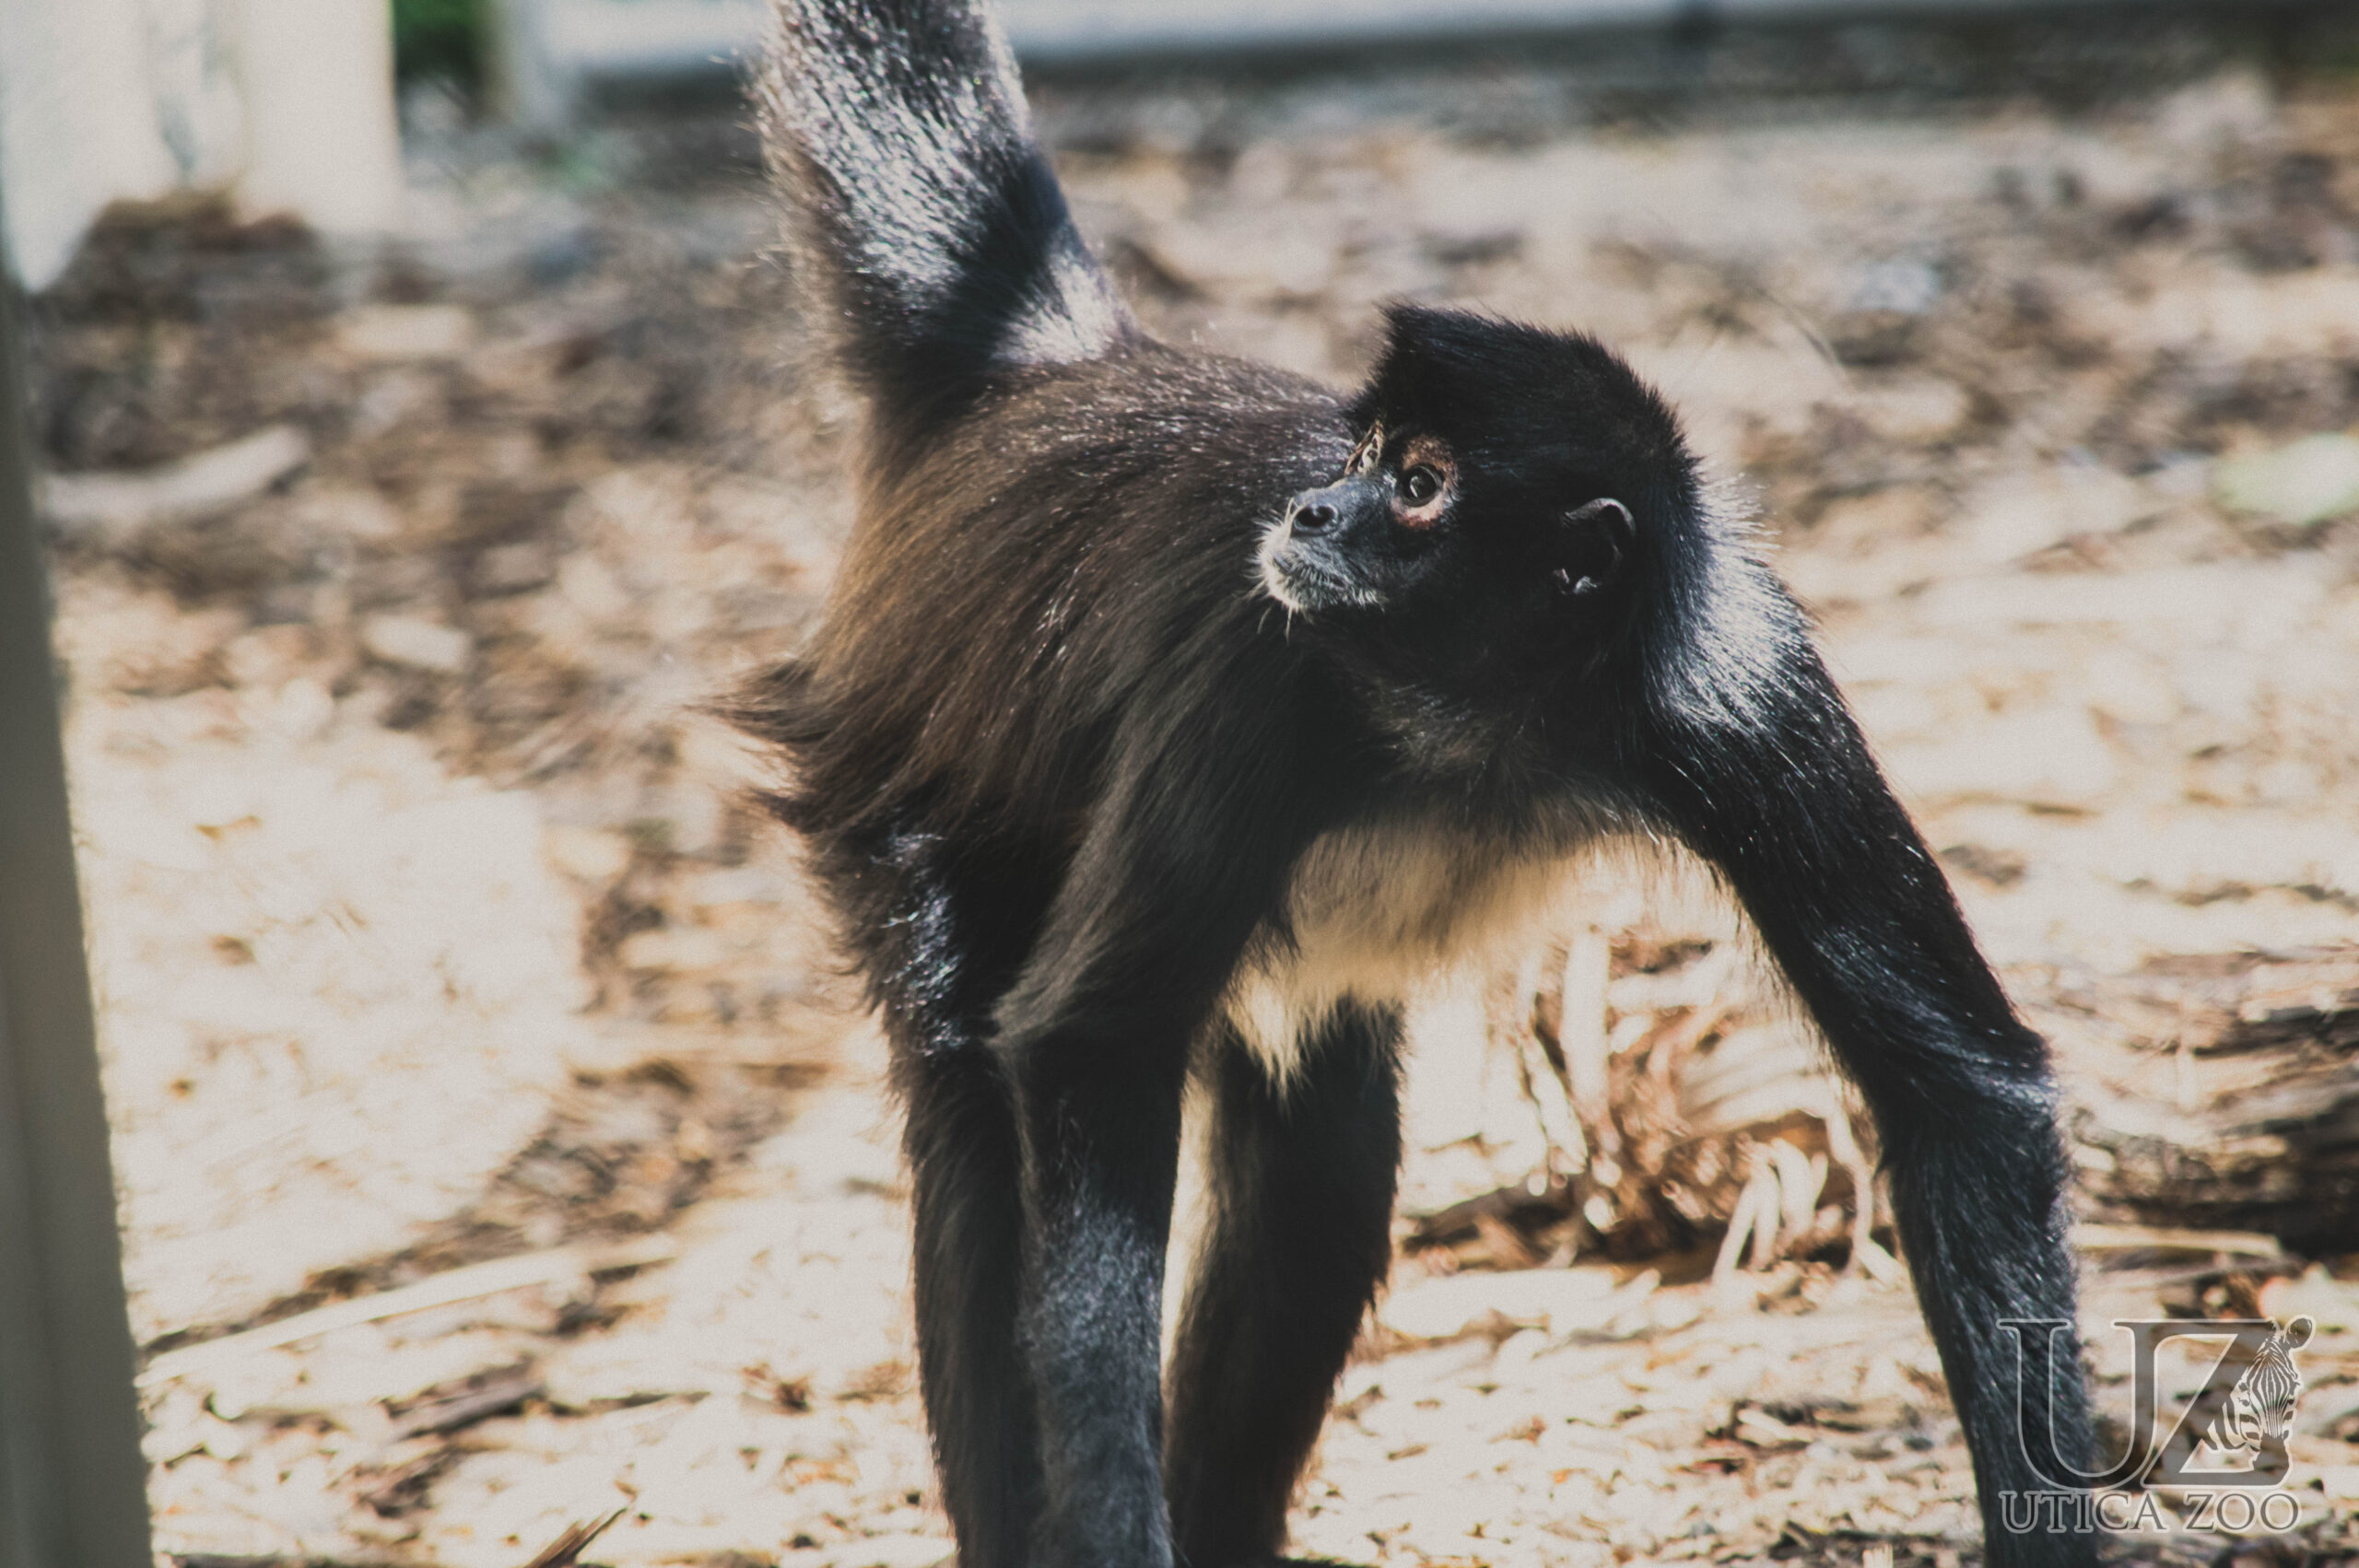 Mexican Spider Monkey – Utica Zoo